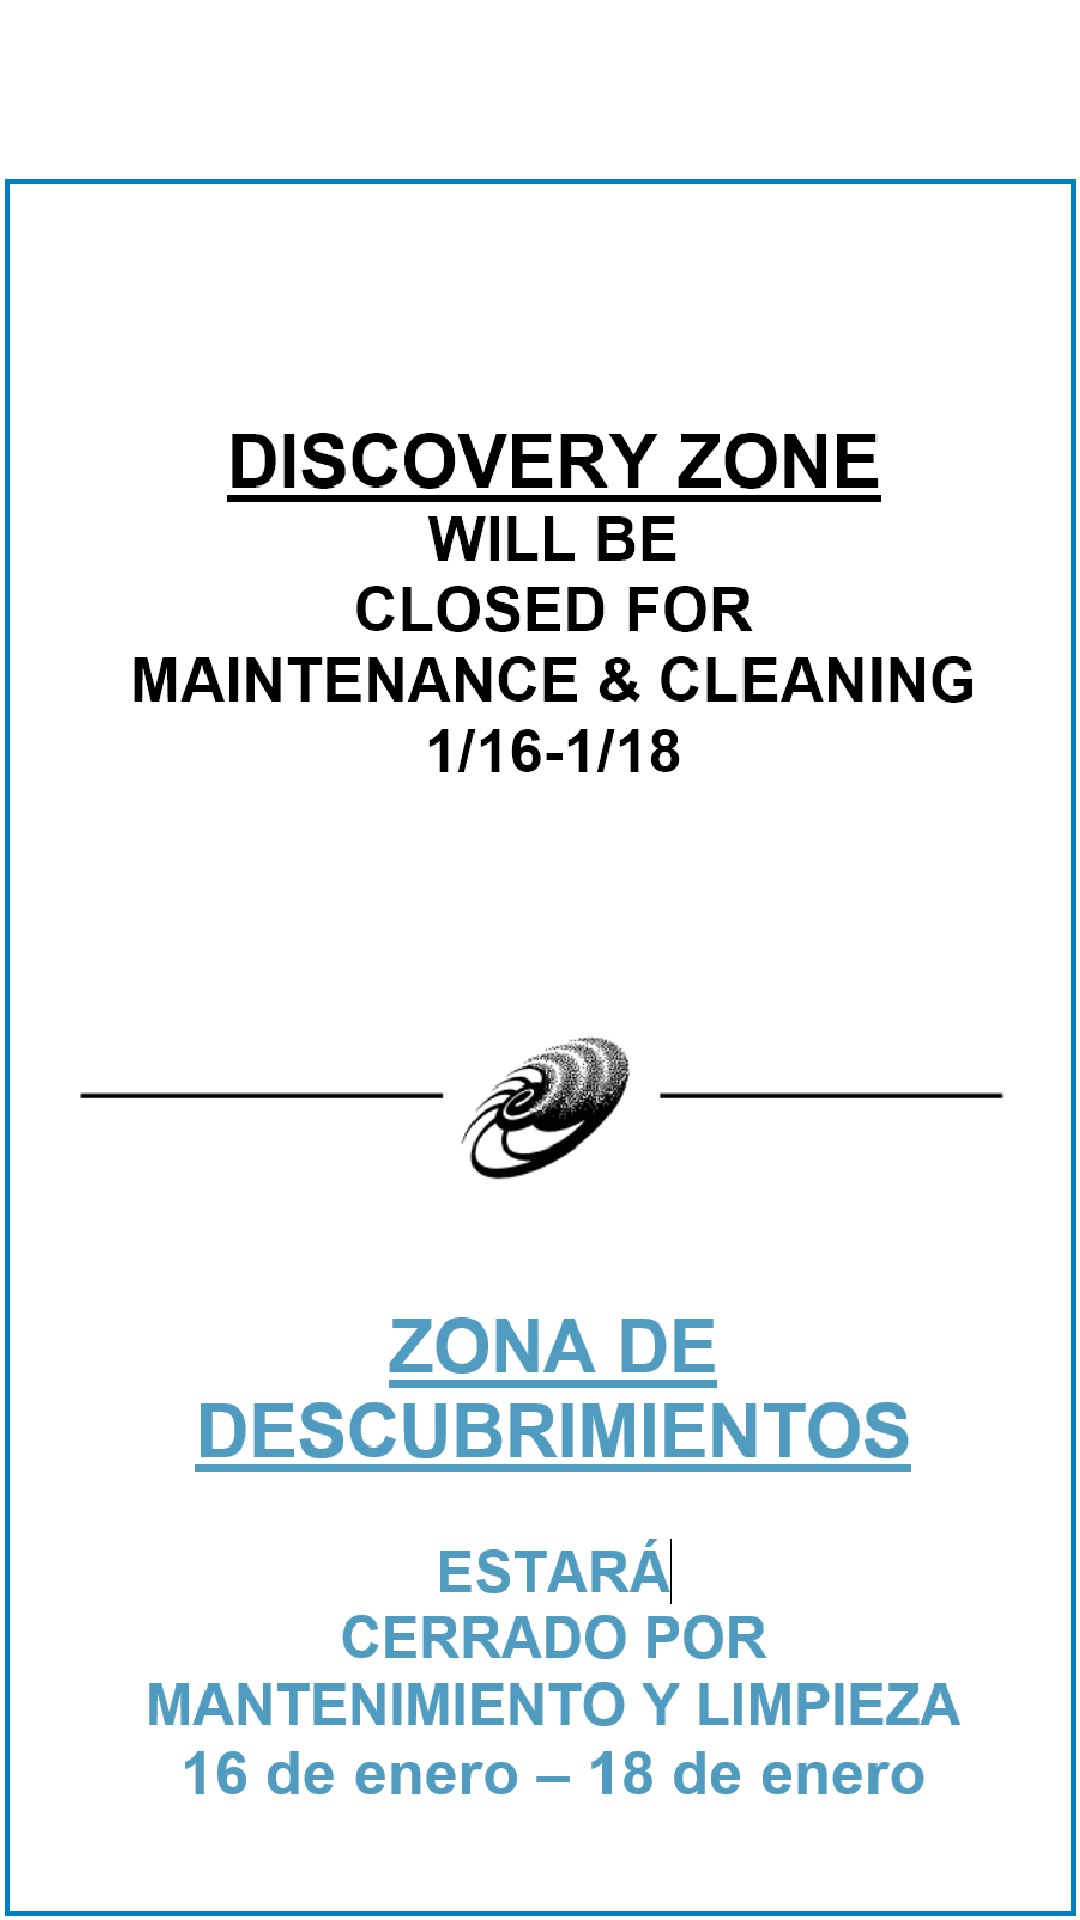 DZ Closure Sign 1.16 To 1.18